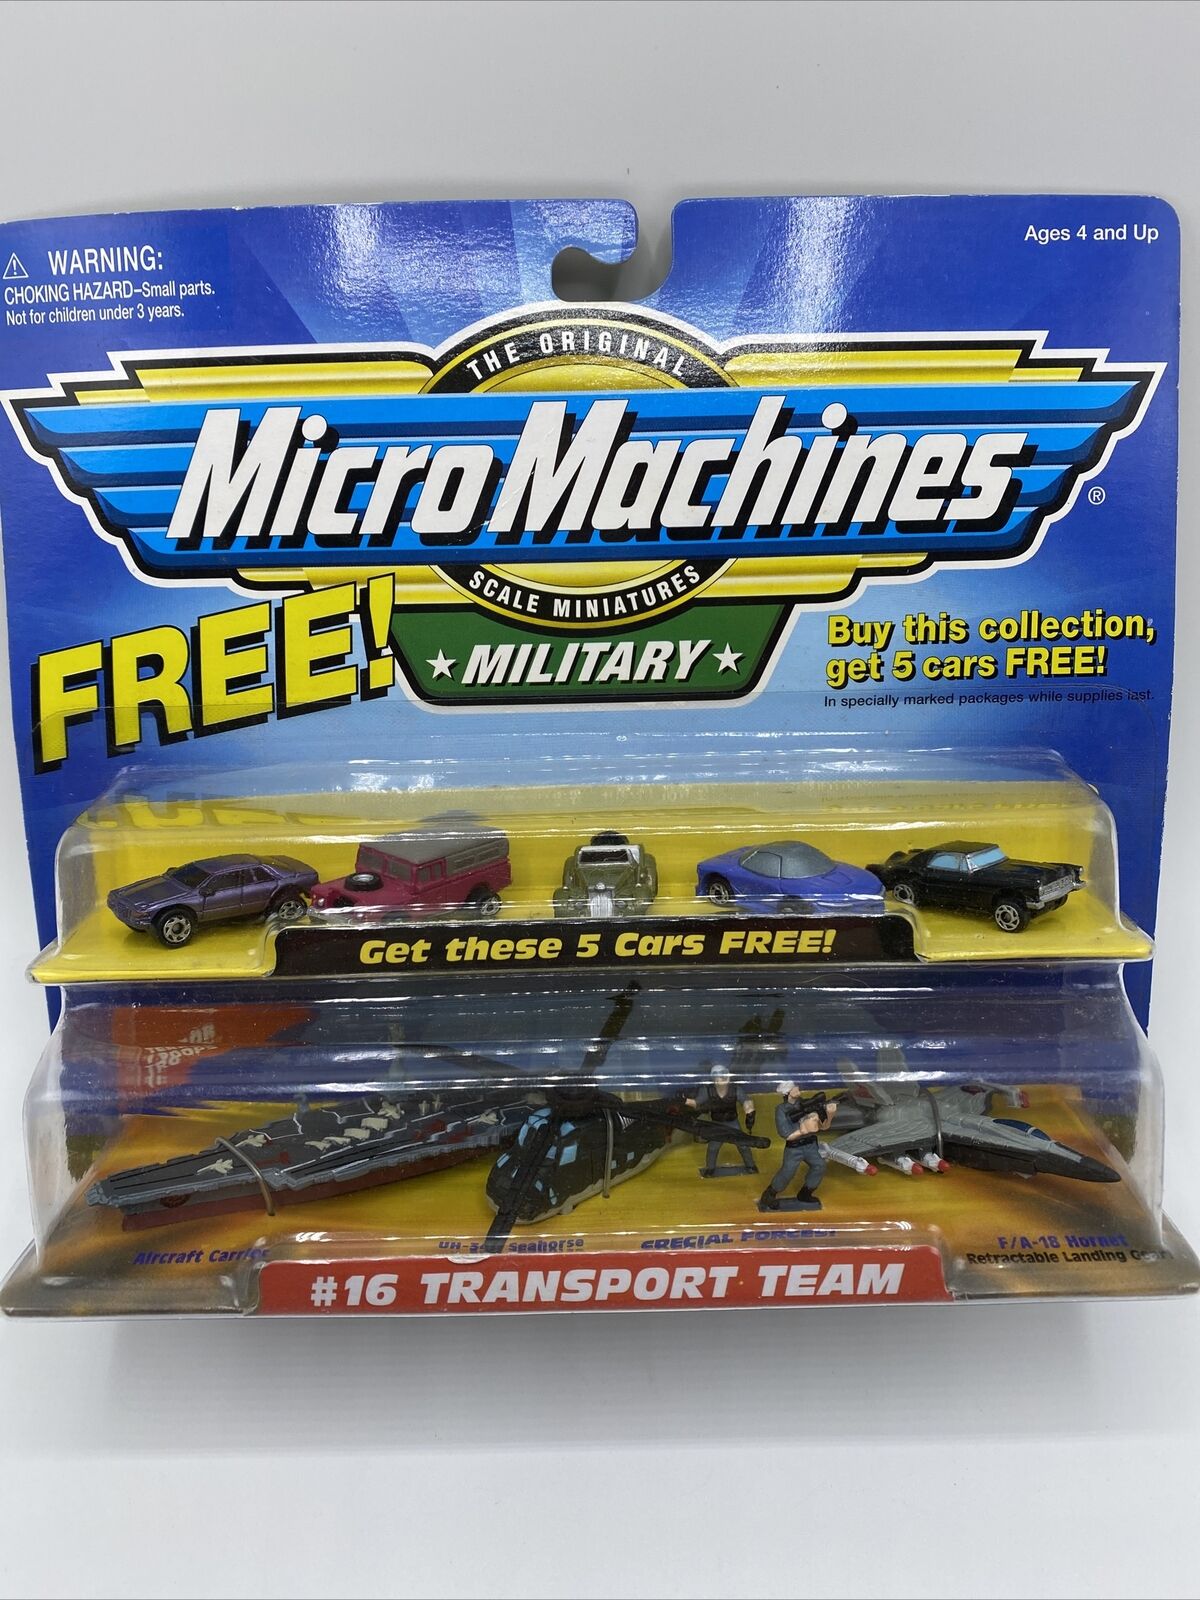 67% OFF of fixed price Galoob Micro Machines MILITARY #16 Transport Team 1999 Te Terror Very popular!